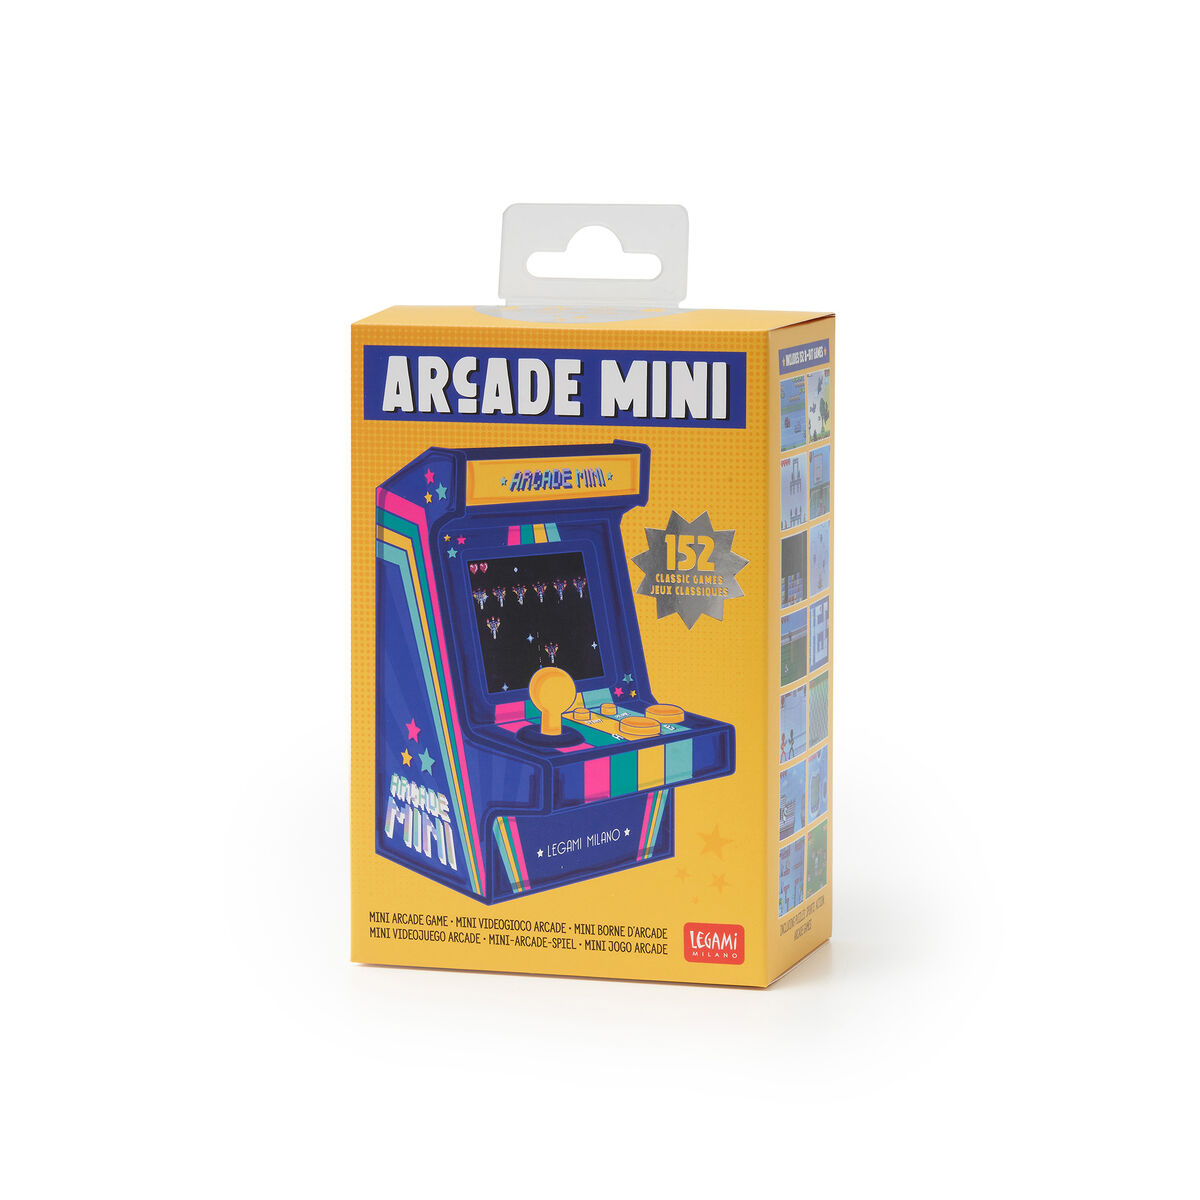 Mini-Arcade-Videospiel - Arcade Mini, , zoo